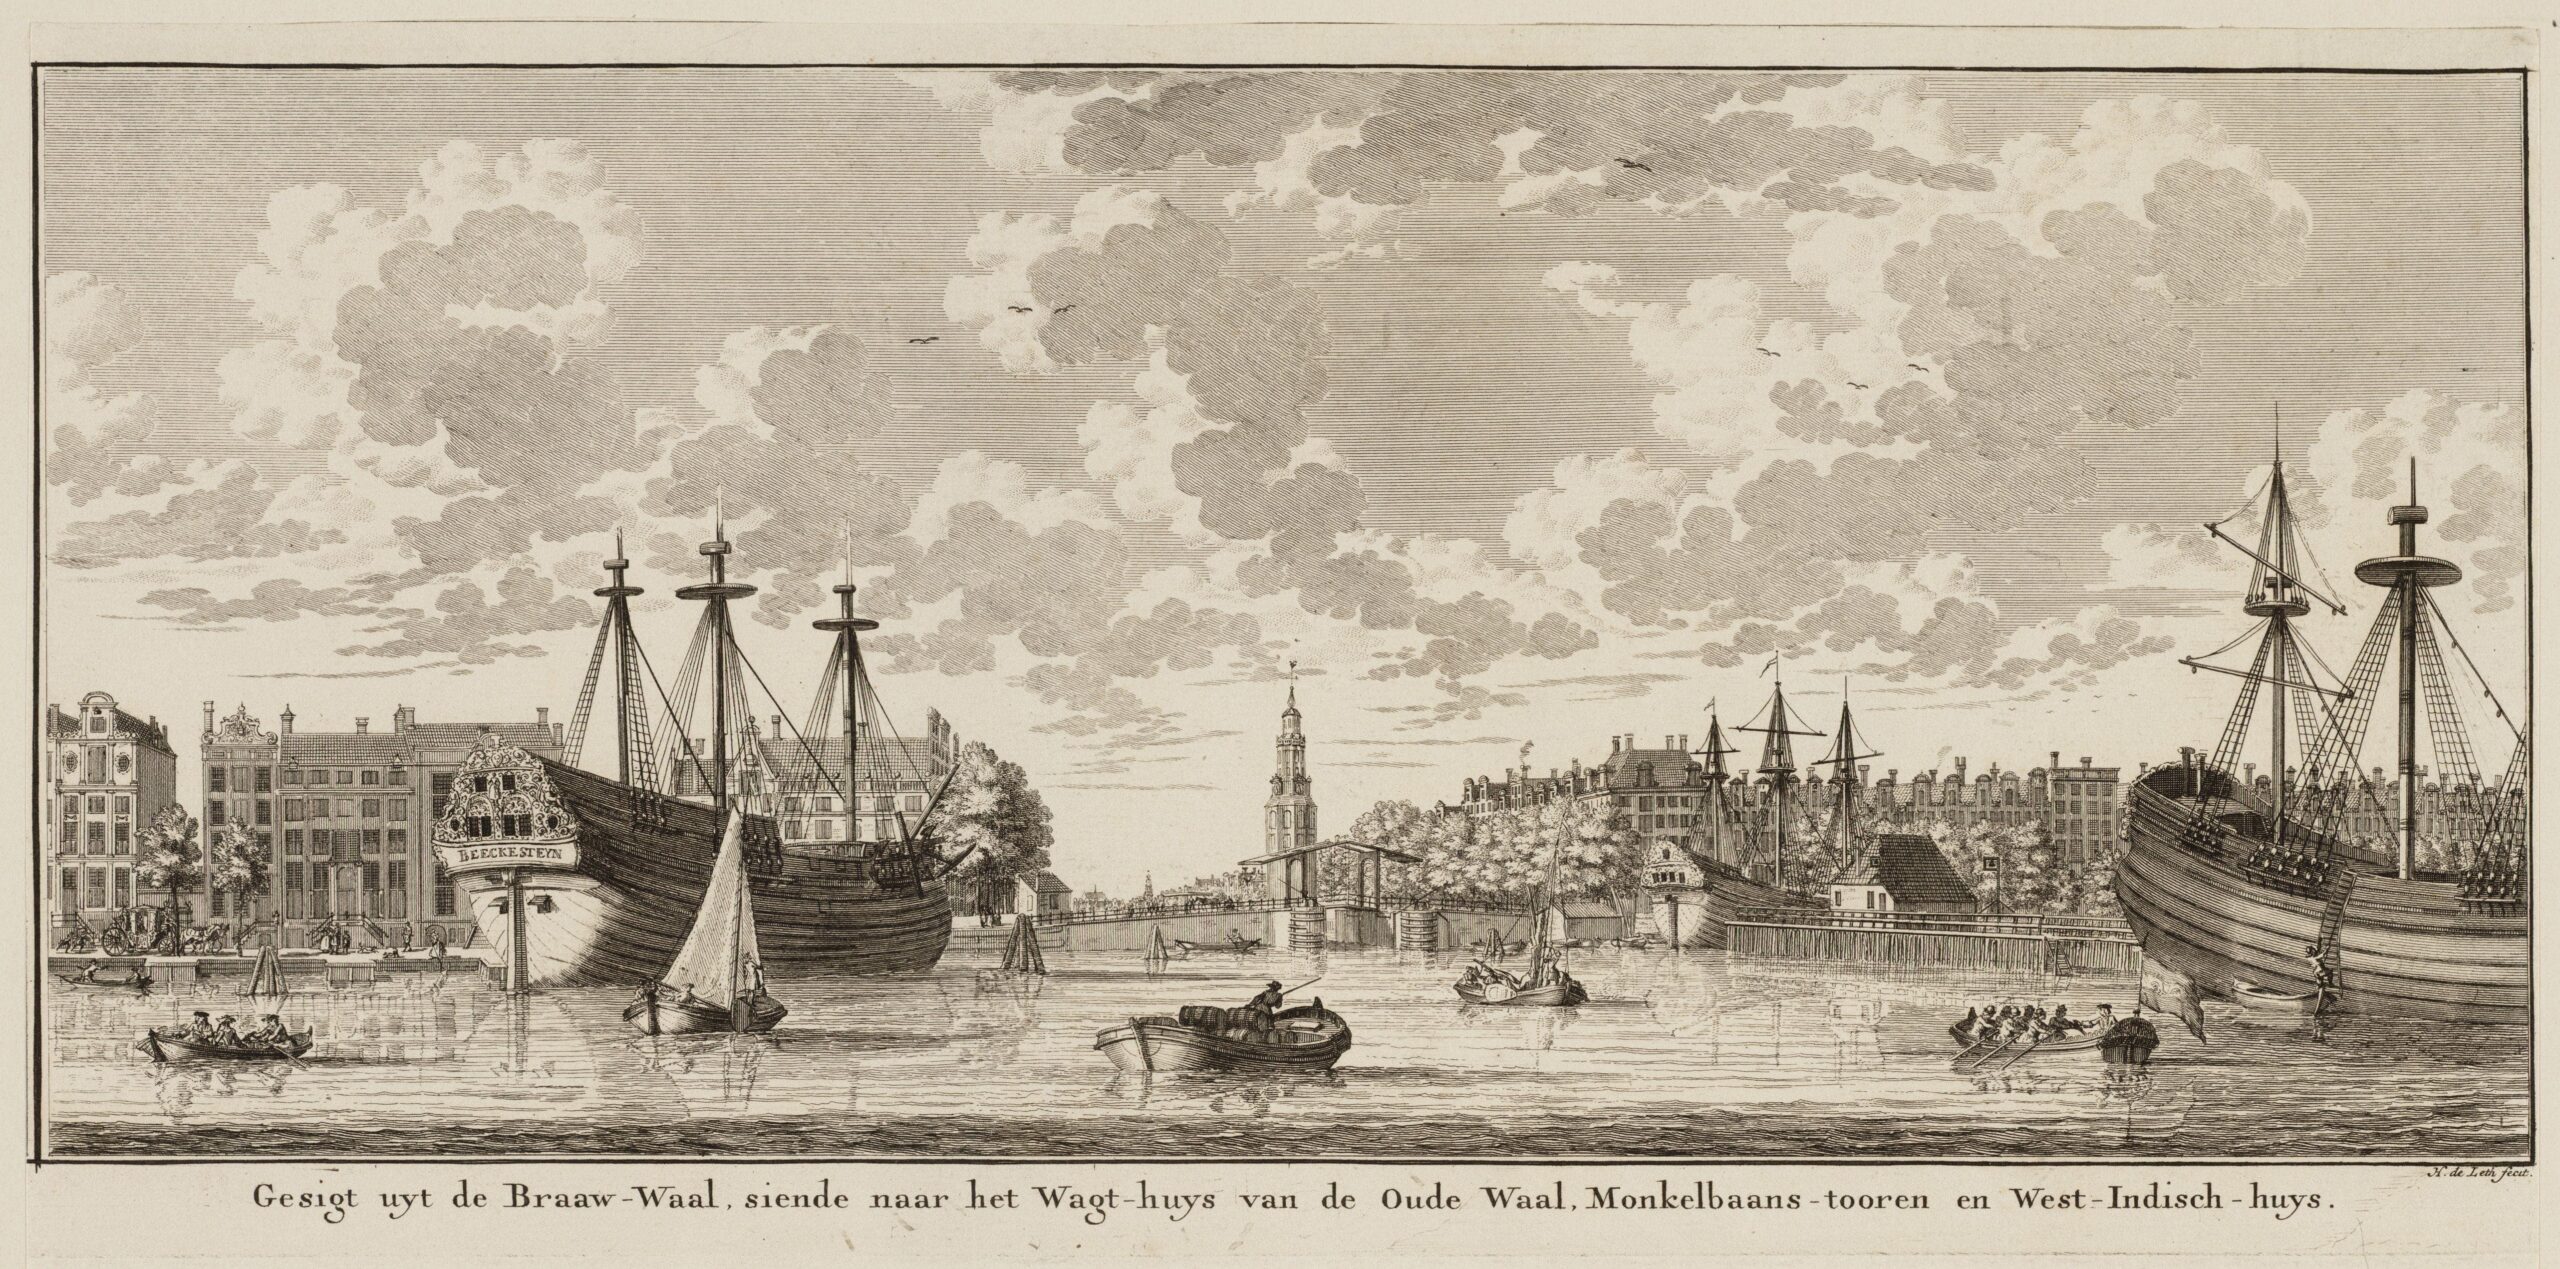 Compagnie néerlandaise des Indes occidentales, Dutch West India Company